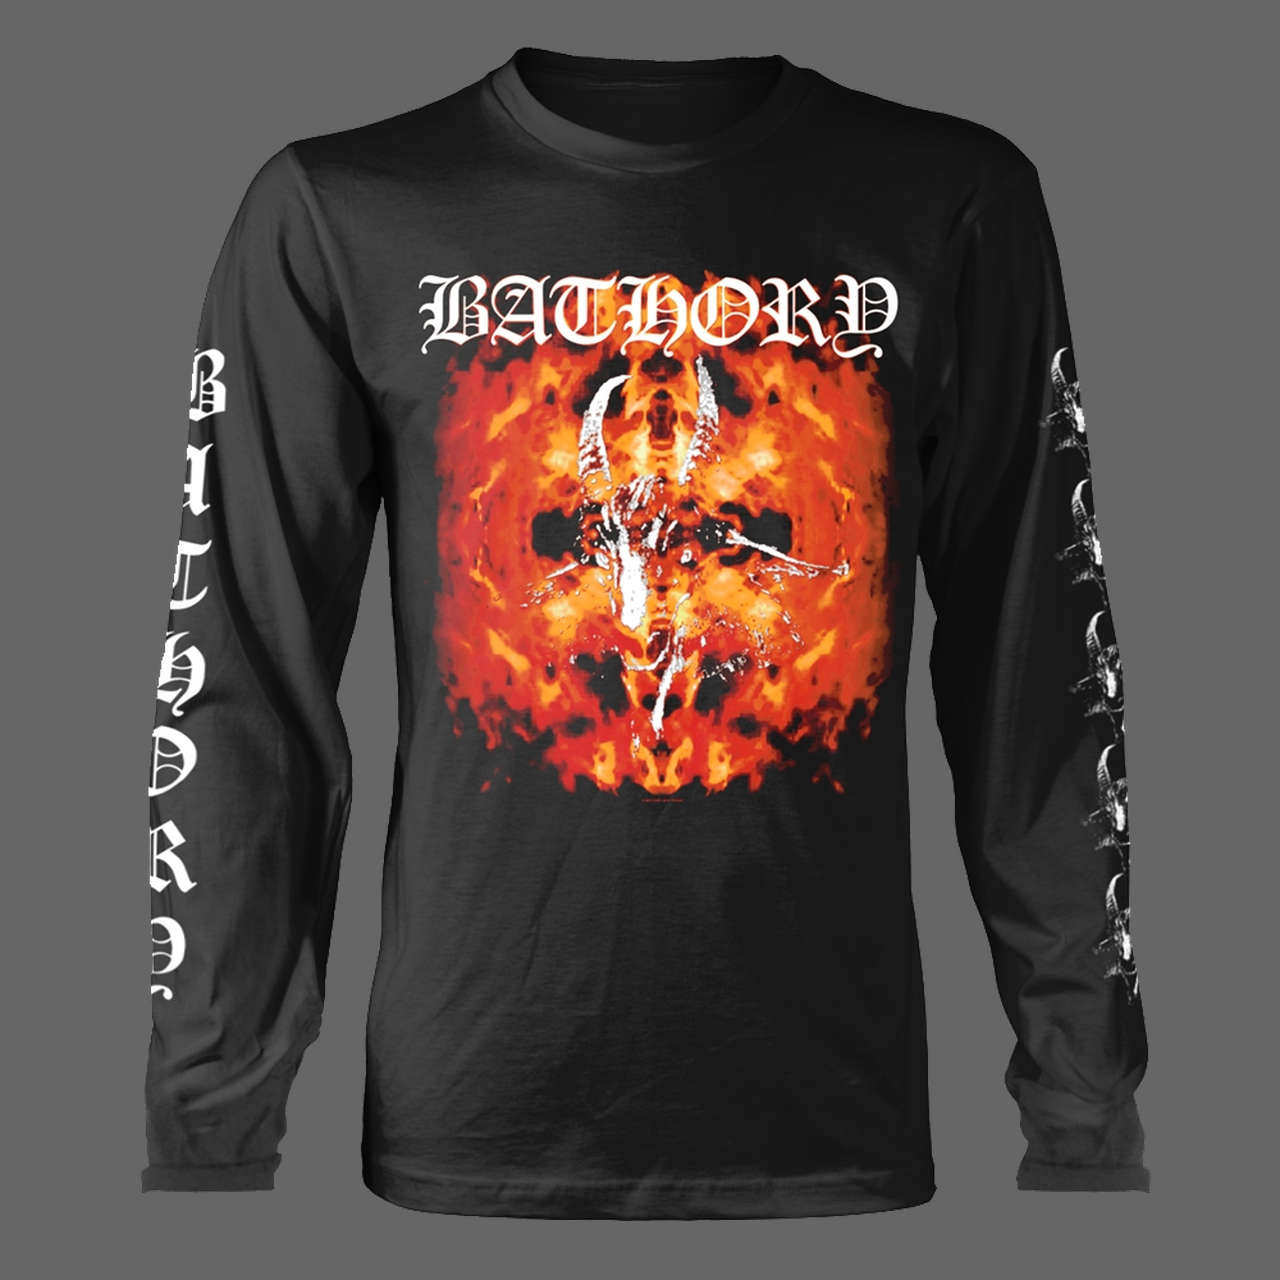 Bathory - Katalog (Long Sleeve T-Shirt - Released: 26 January 2024)